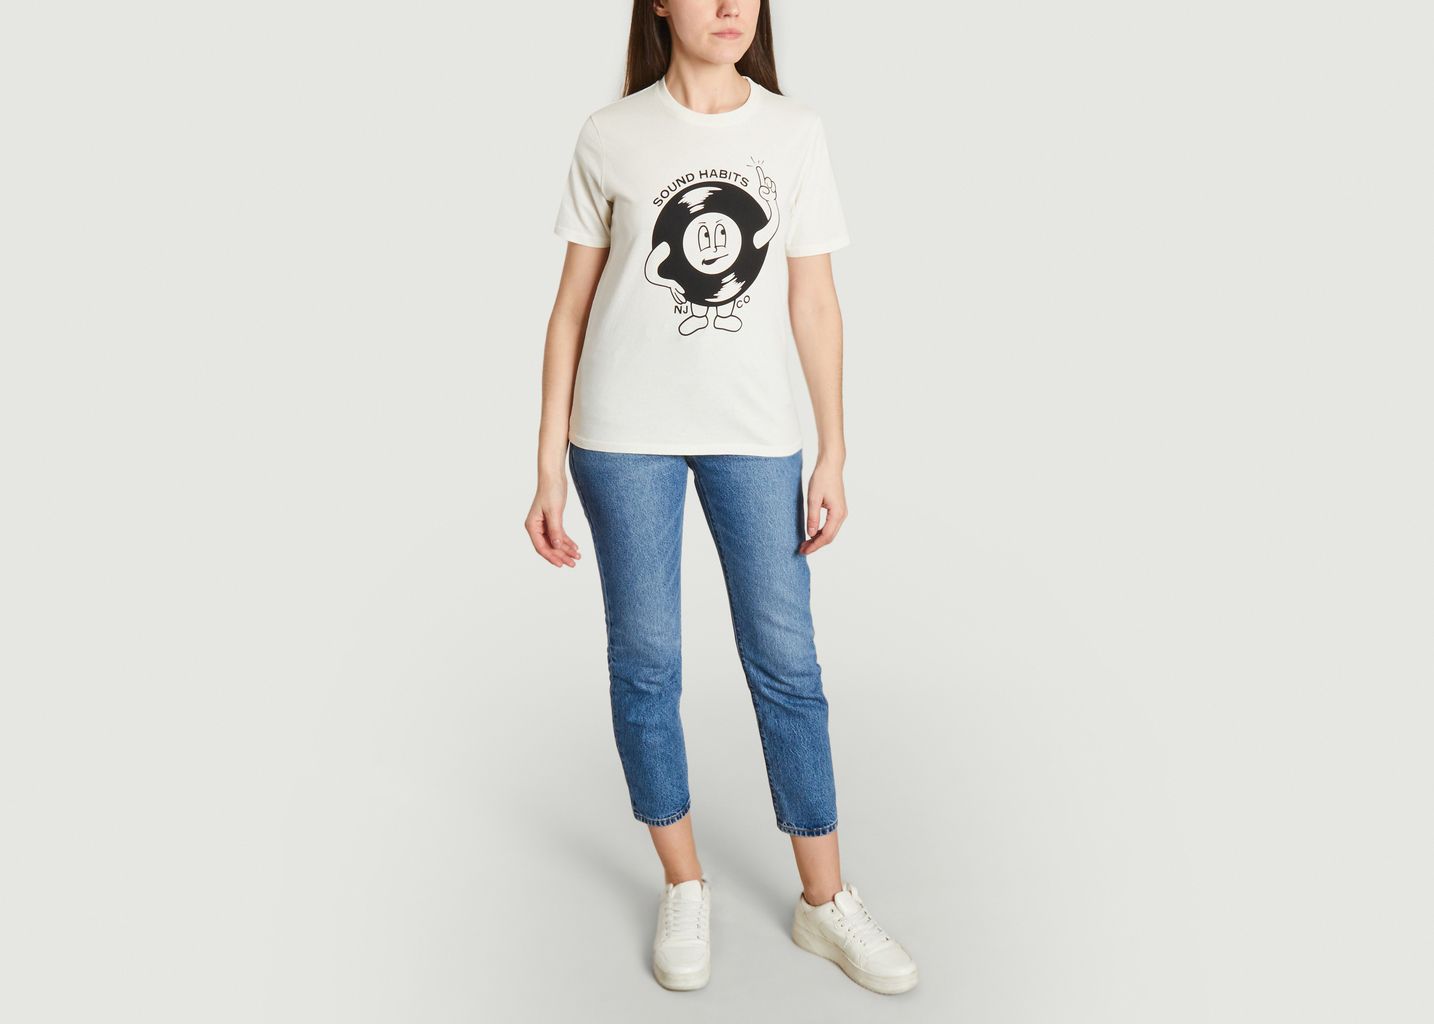 Joni Sound Habits T-shirt - Nudie Jeans